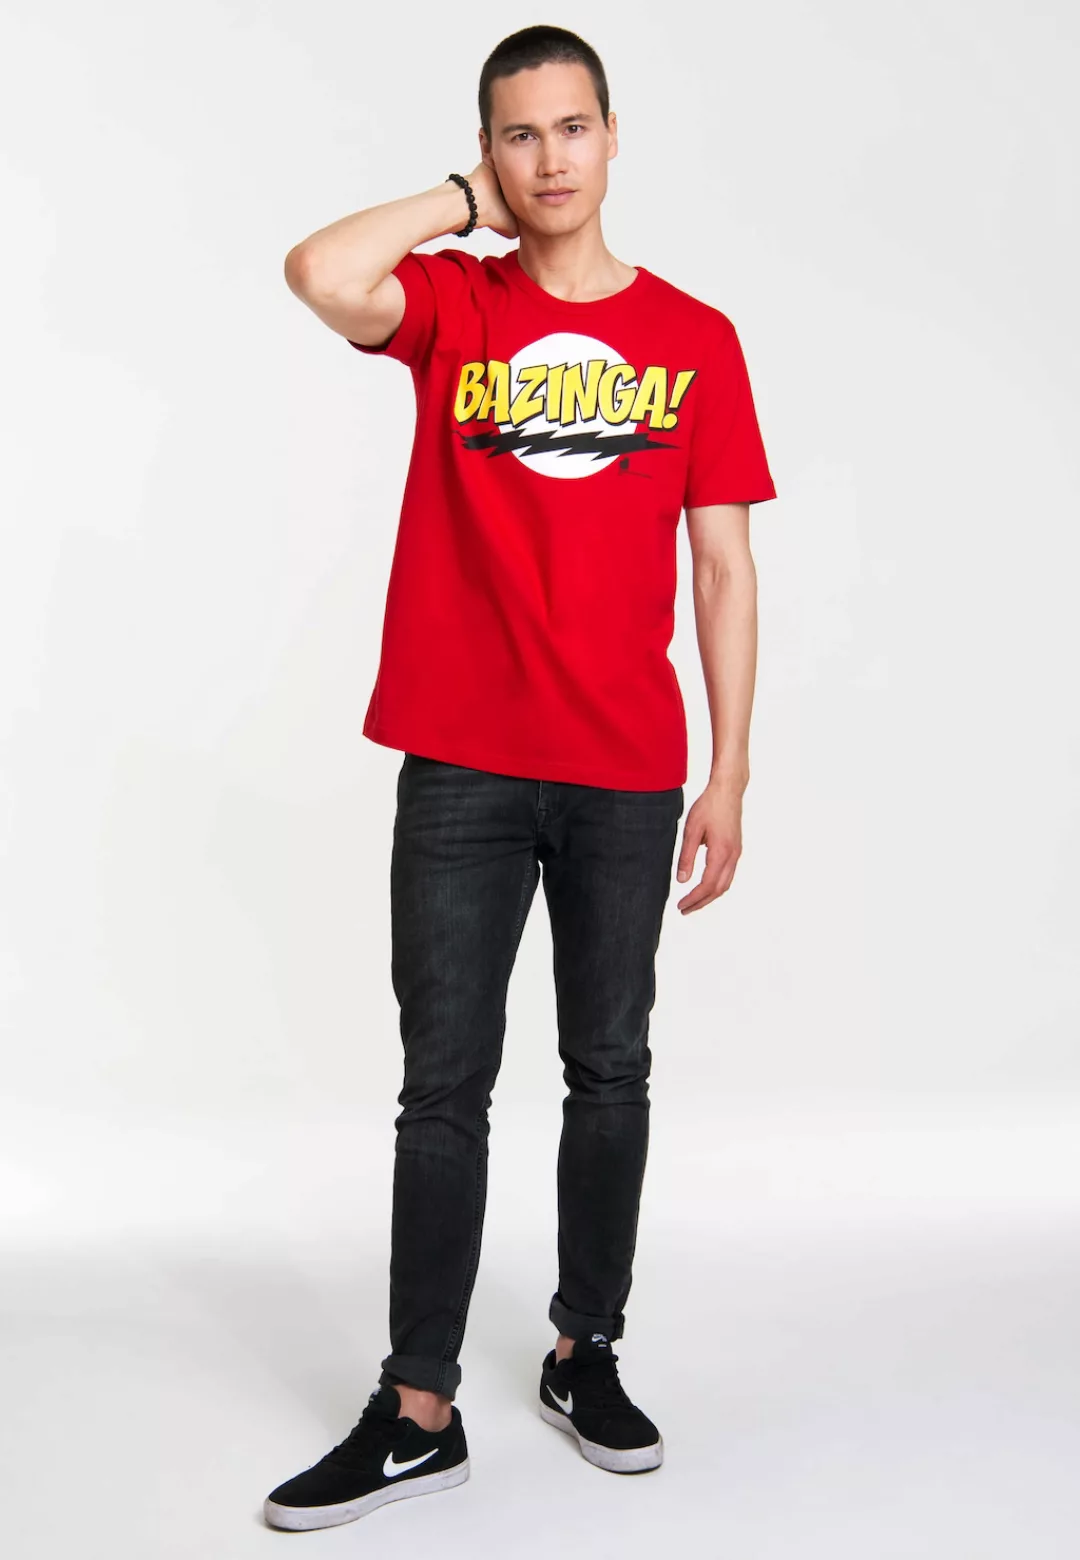 LOGOSHIRT T-Shirt "Bazinga - The Big Bang Theory" günstig online kaufen